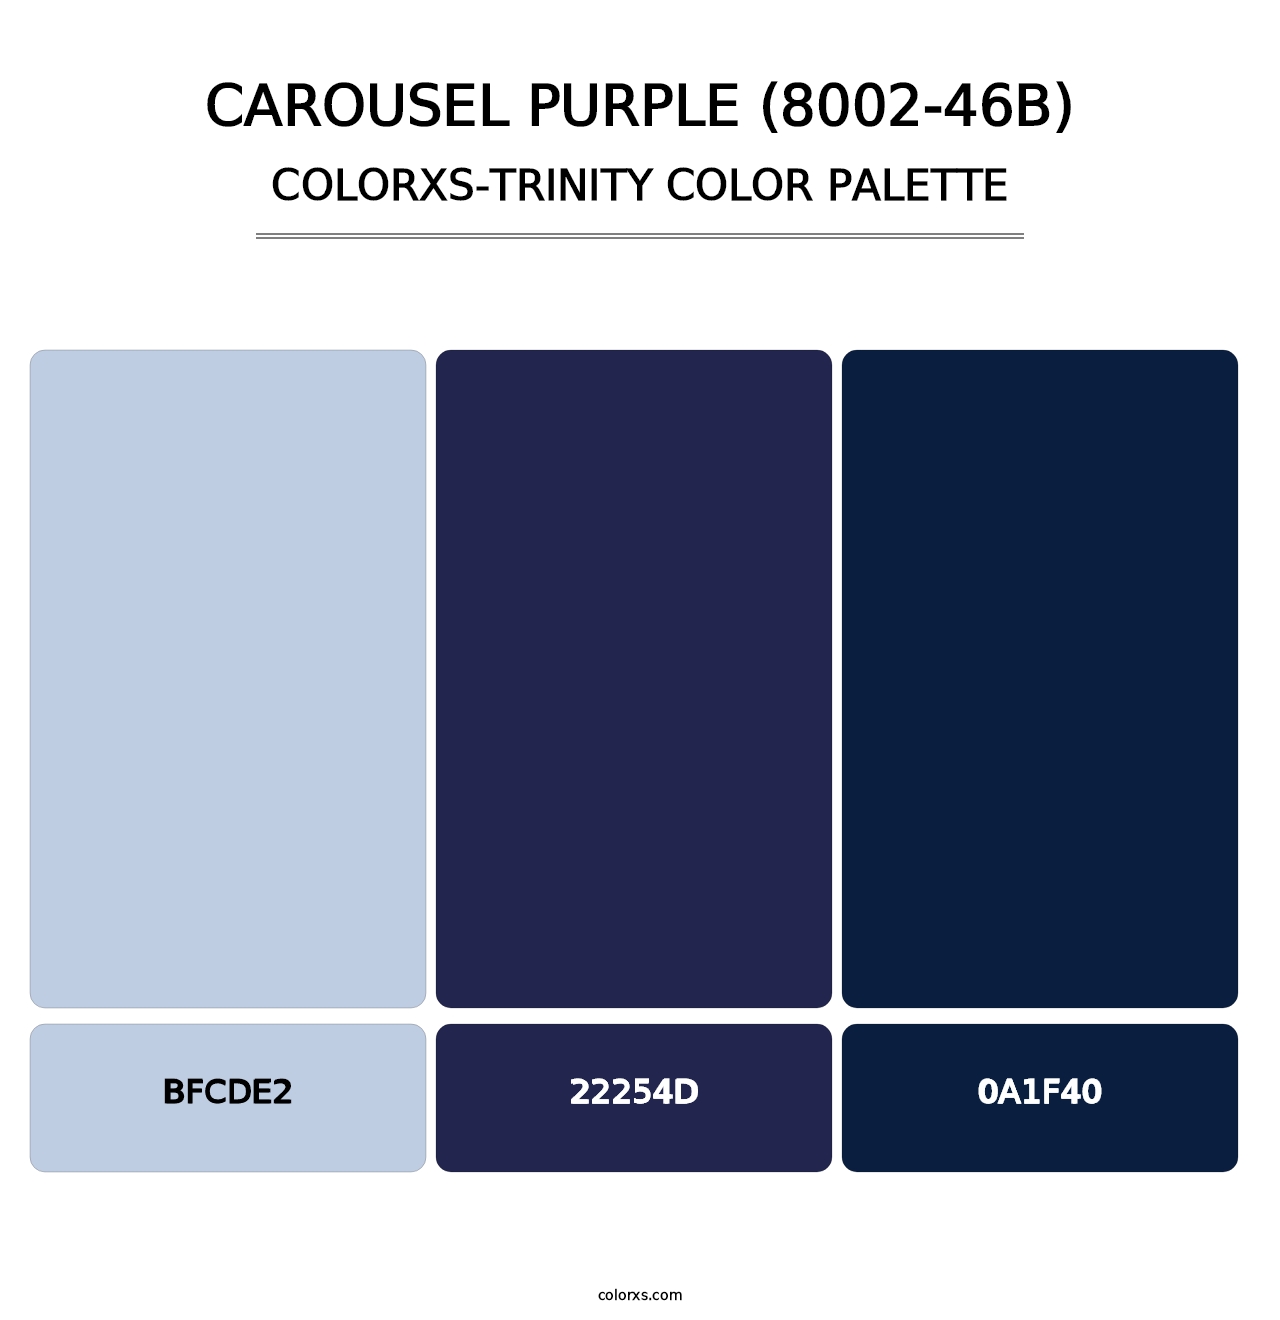 Carousel Purple (8002-46B) - Colorxs Trinity Palette